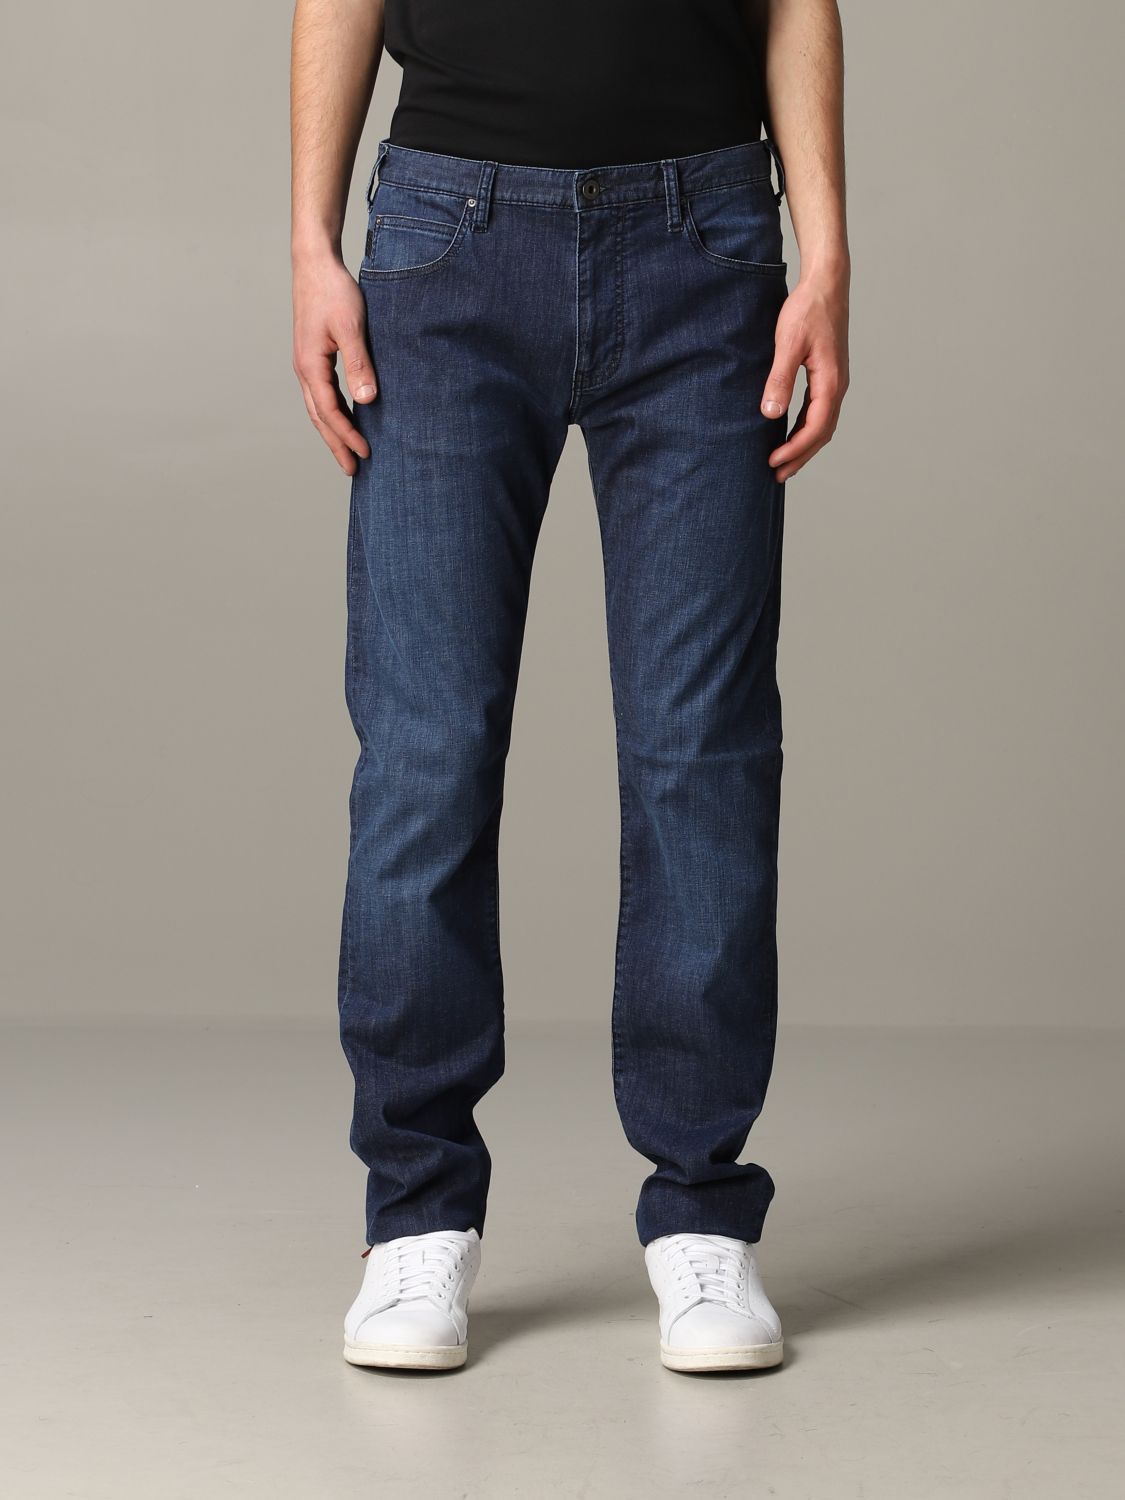 Emporio Armani regular fit jeans 8 oz 